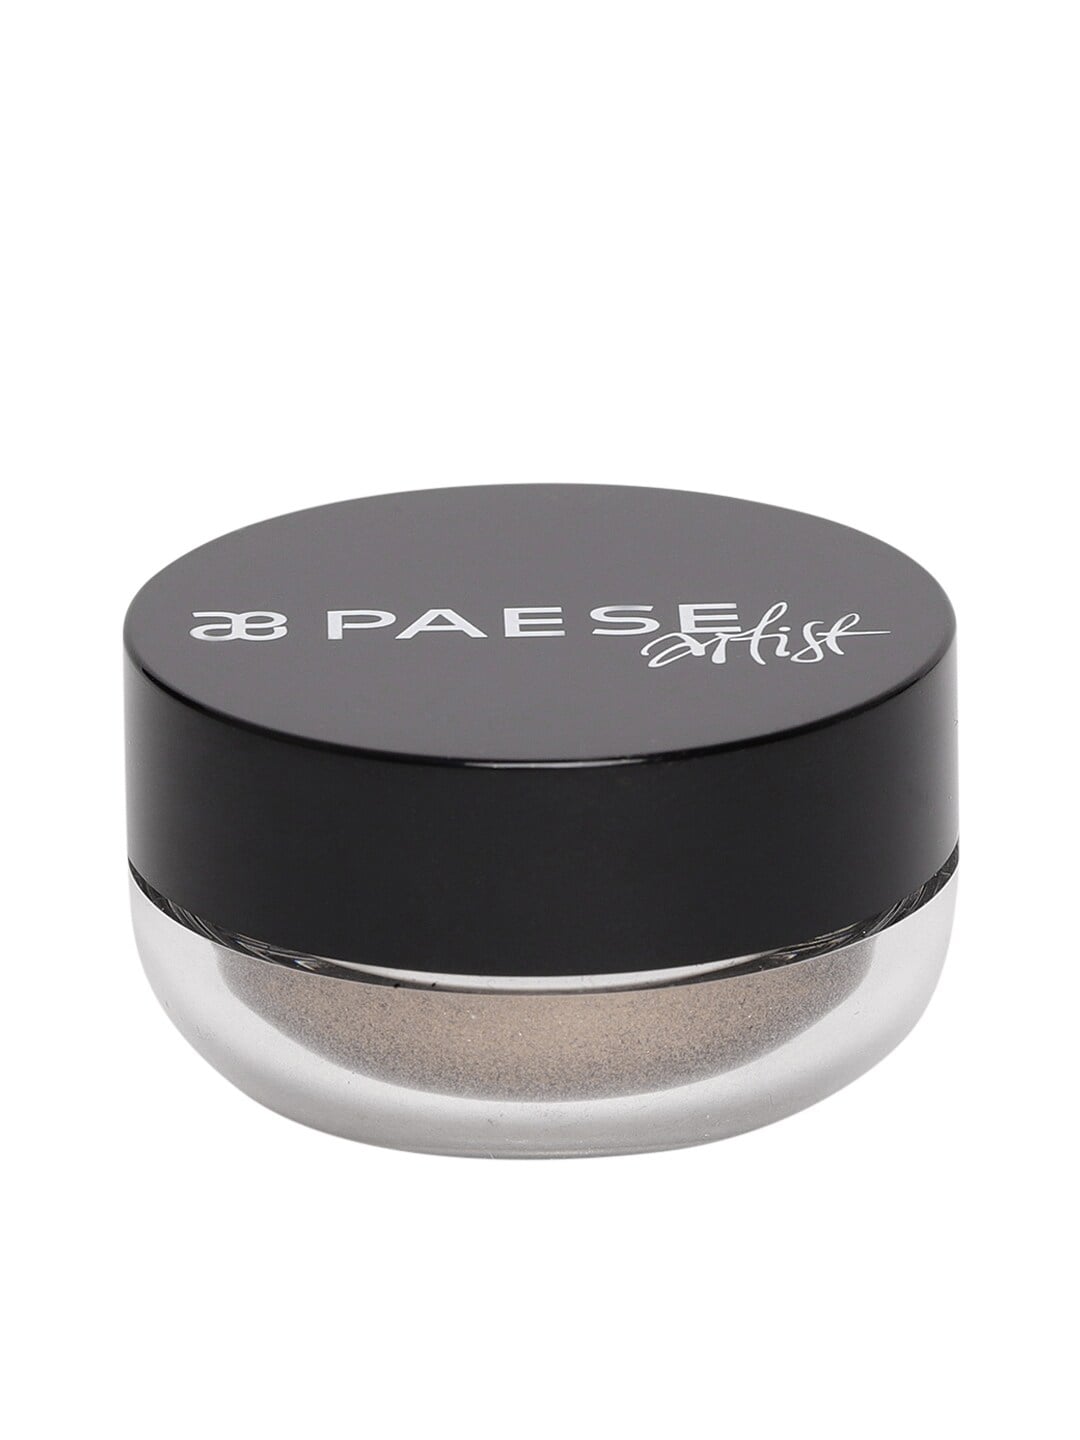 Paese Cosmetics Pure Pigments Eyeshadow - Smoke 08 Price in India